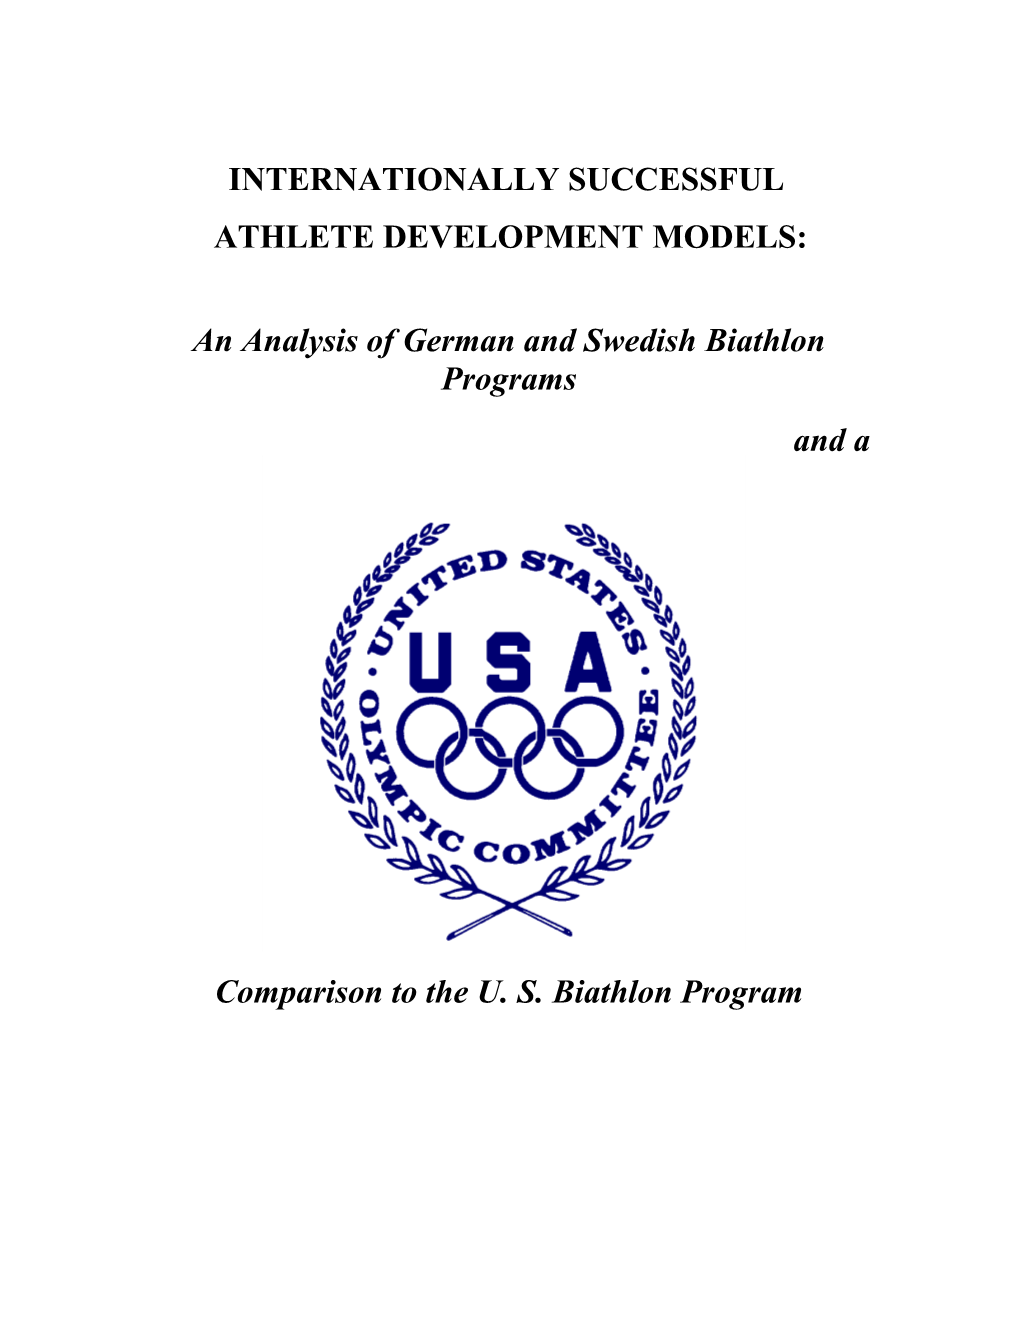 An Analysis of German and Swedish Biathlon Programs